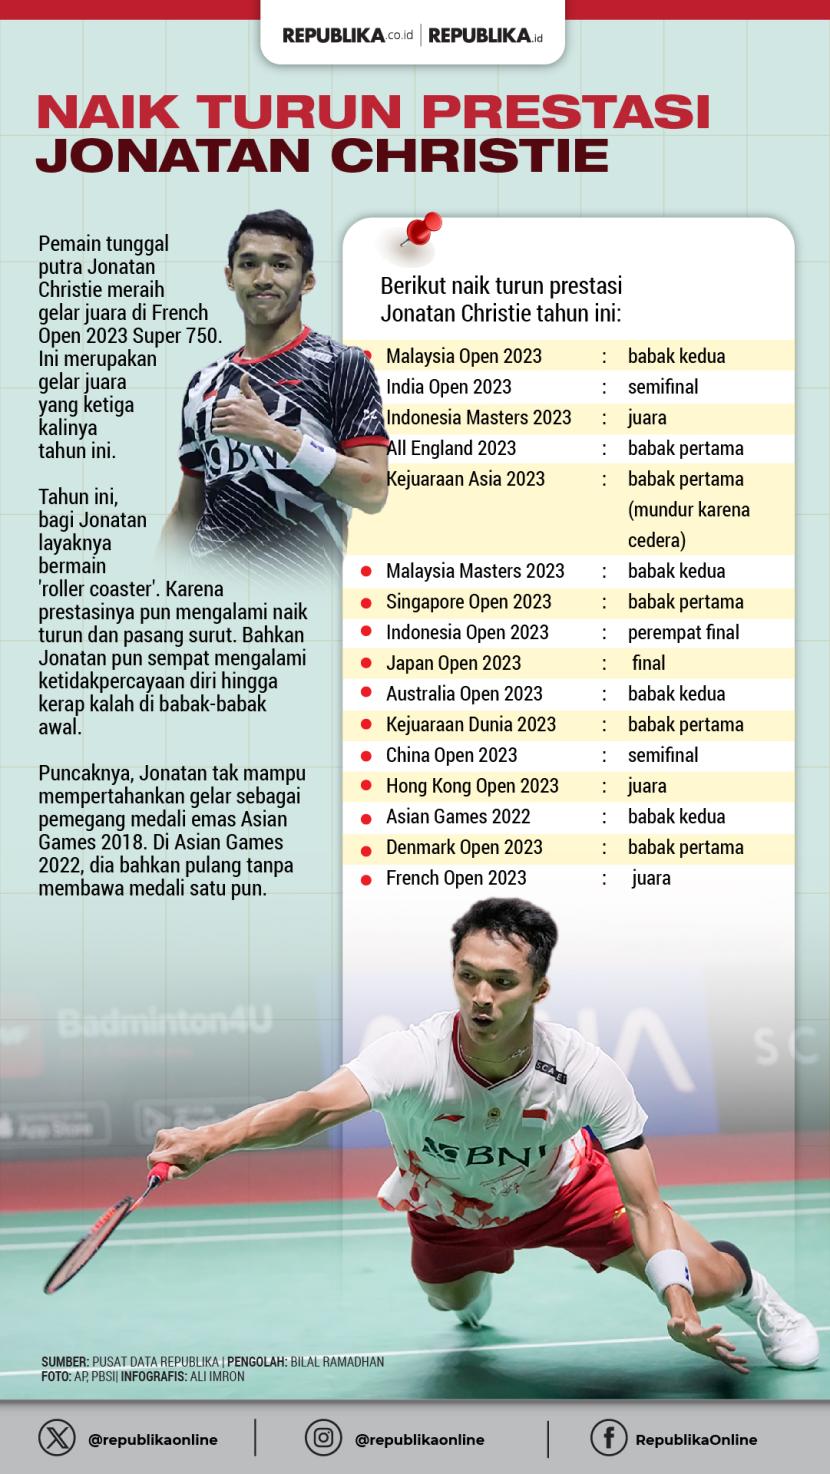 Pasang surut prestasi pemain tunggal putra Indonesia, Jonatan Christie